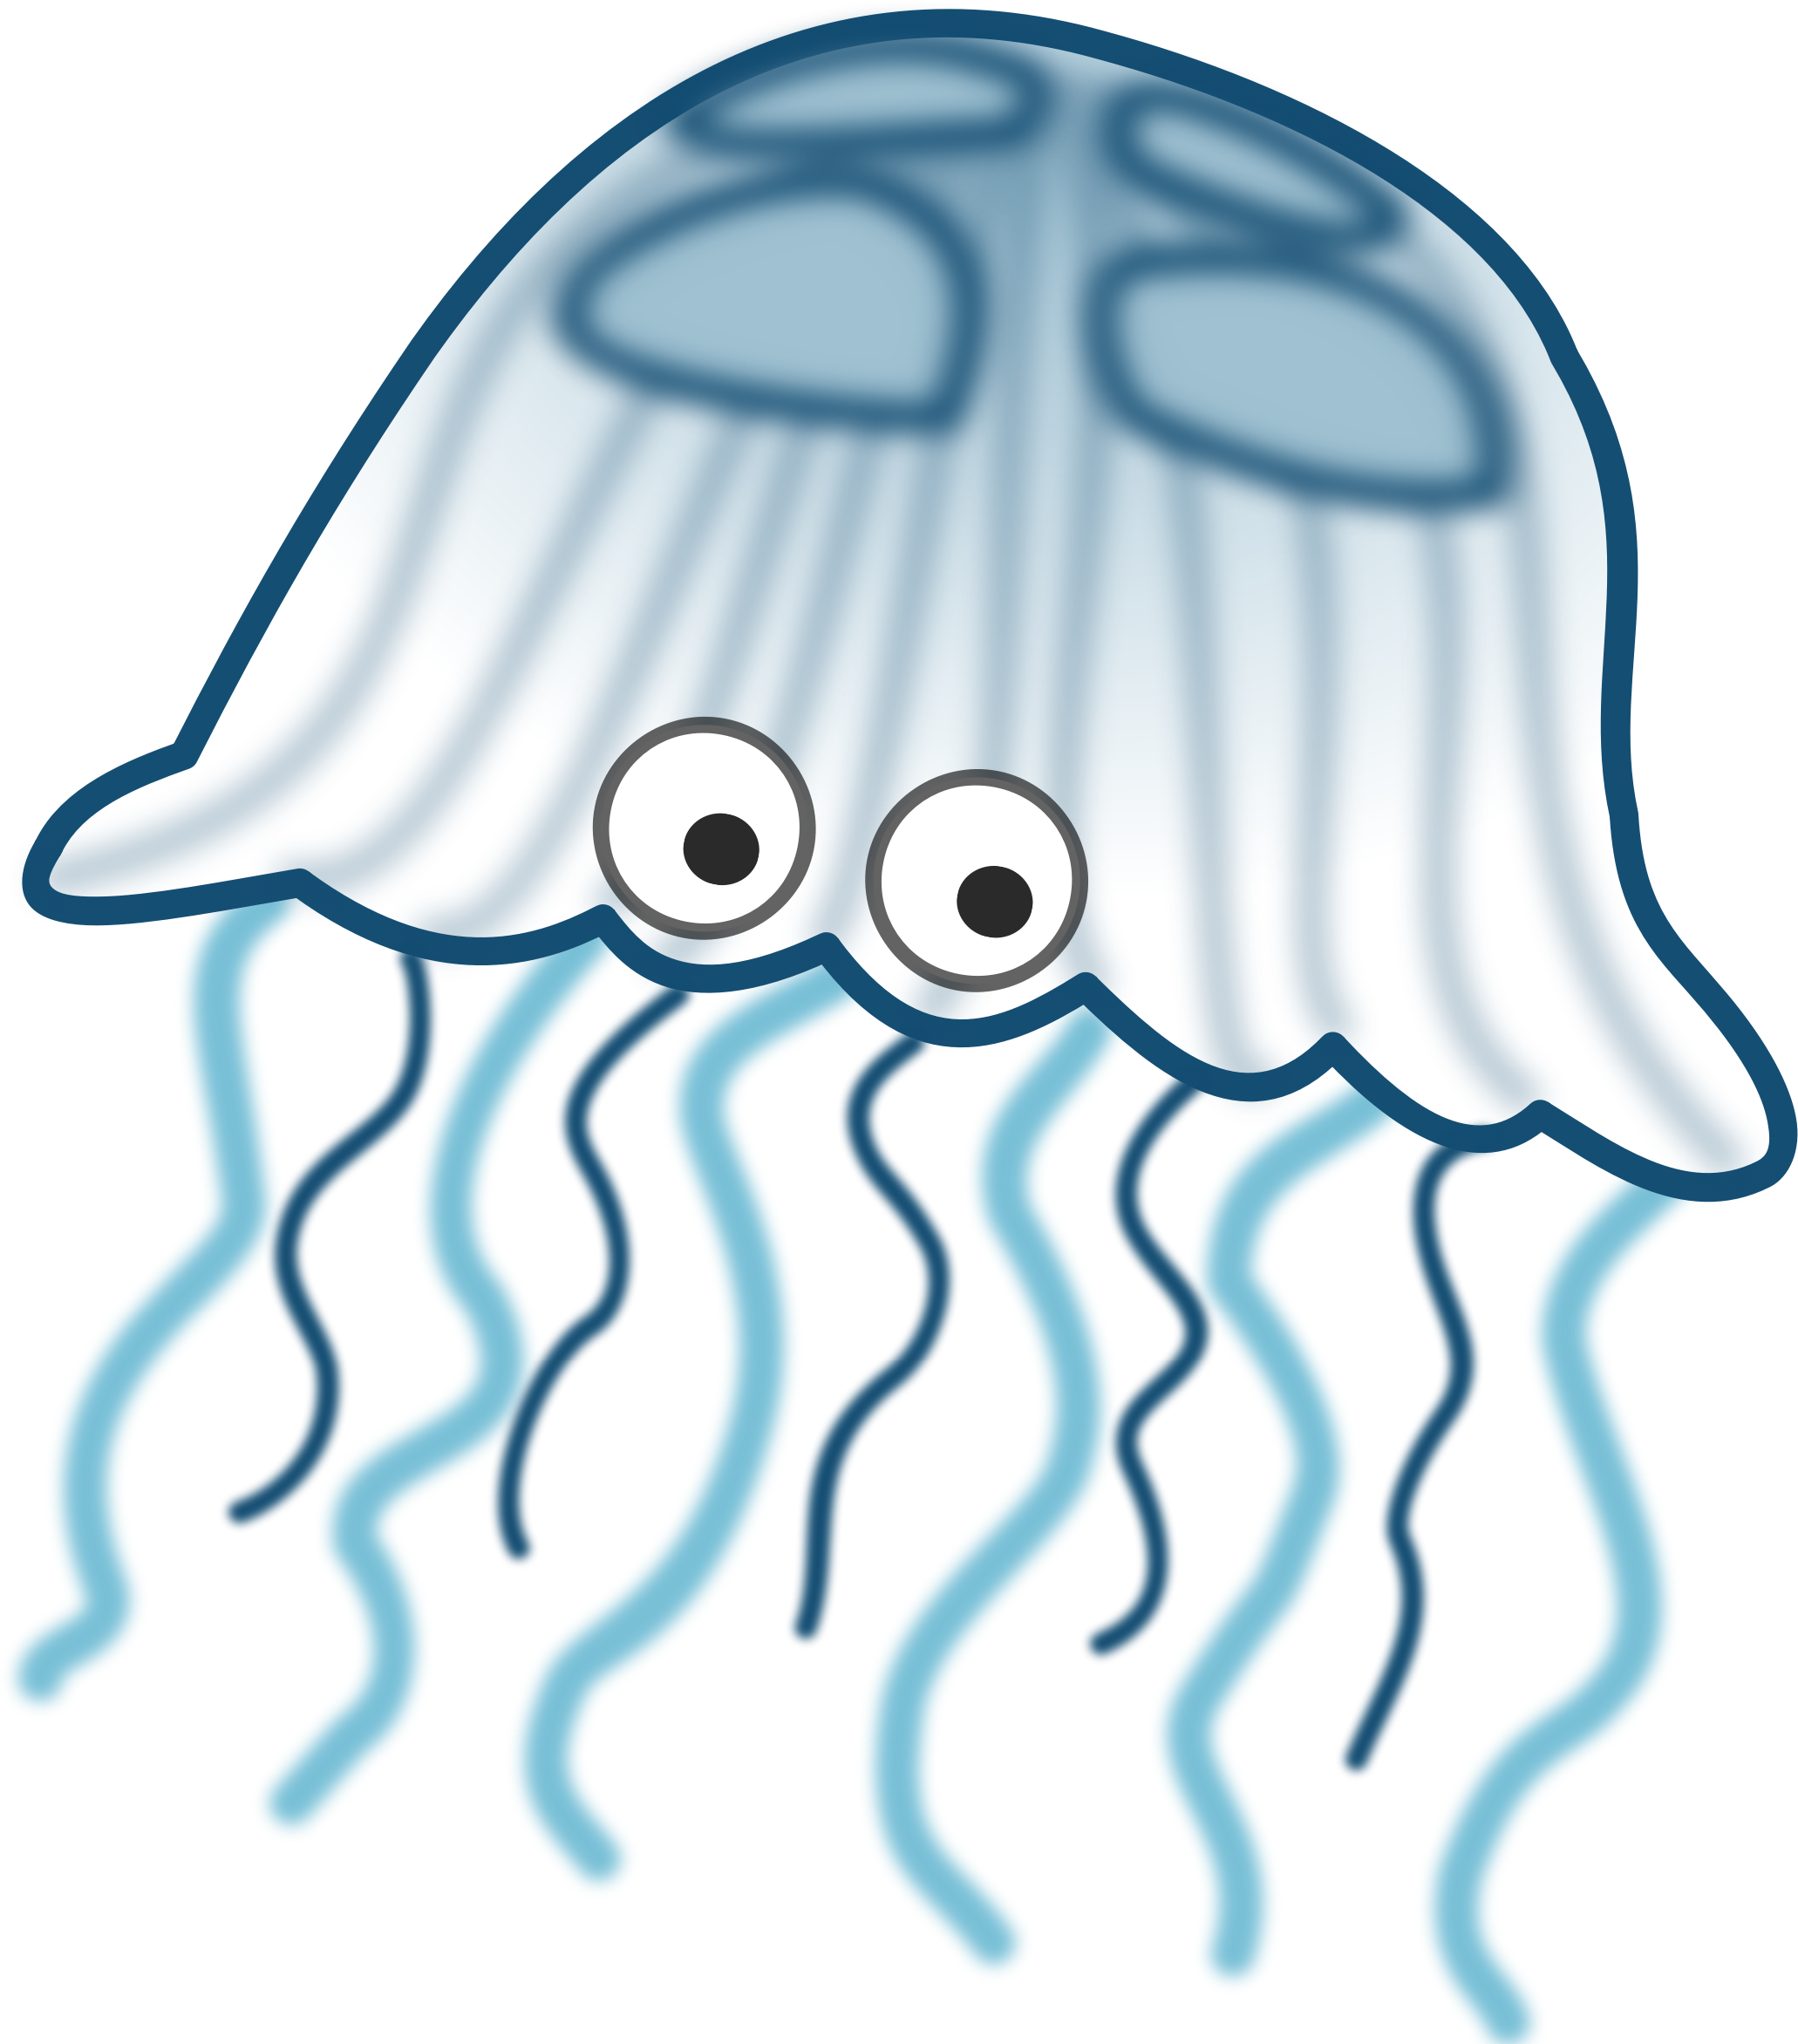 Big image png. Jellyfish clipart small cartoon